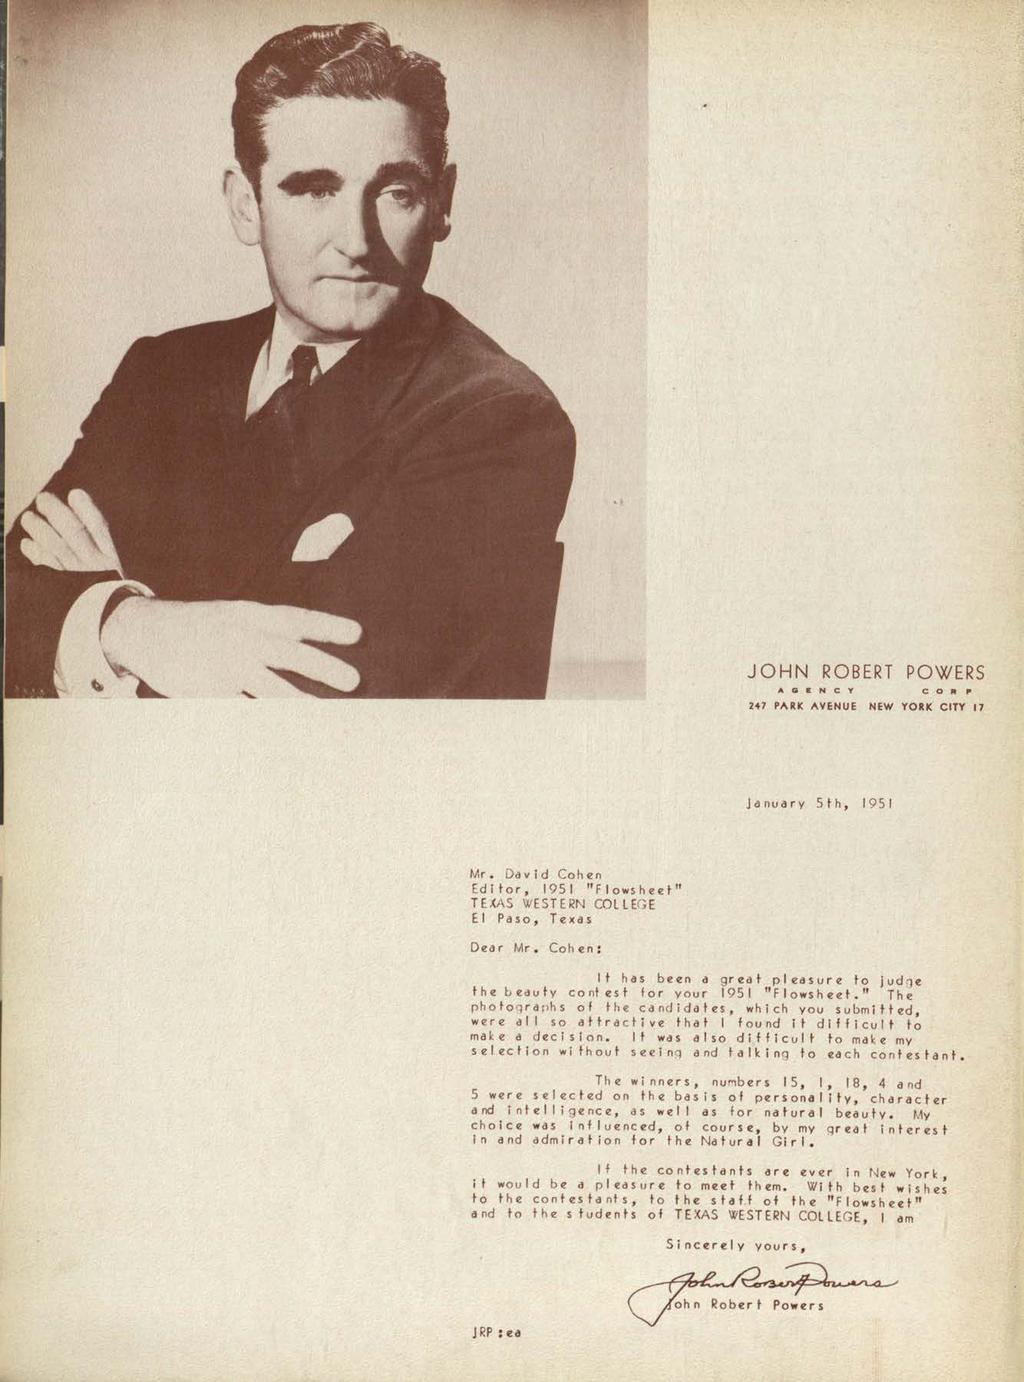 JOHN ROBERT POWERS A G II N C Y COR ~ 247 PARK AVENUE NEW YORK CITY 17 January 5th, 1951 Mr. David Cohen Editor, 1951 "Flowsheet" TE~AS WESTERN COLLEGE EI Paso, Texas Dear Mr.